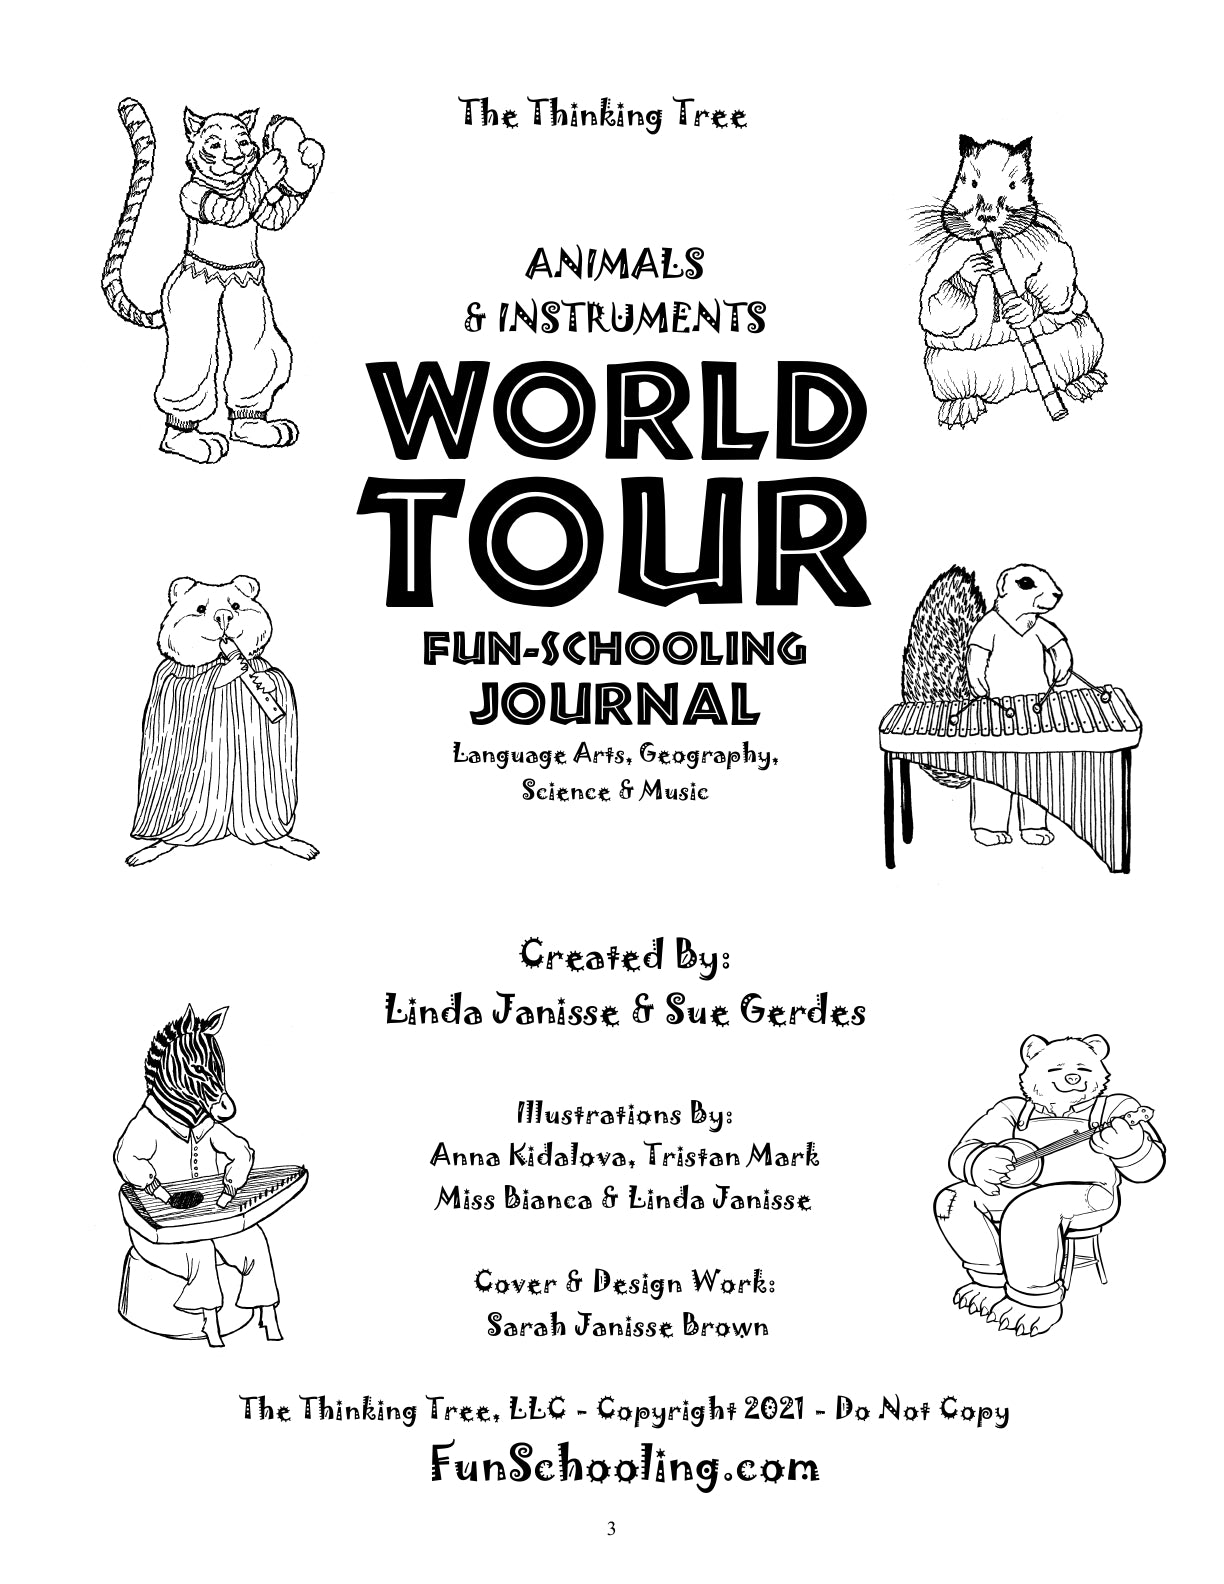 (Age 10+) World Tour Fun-Schooling Journal - Animals & Instruments